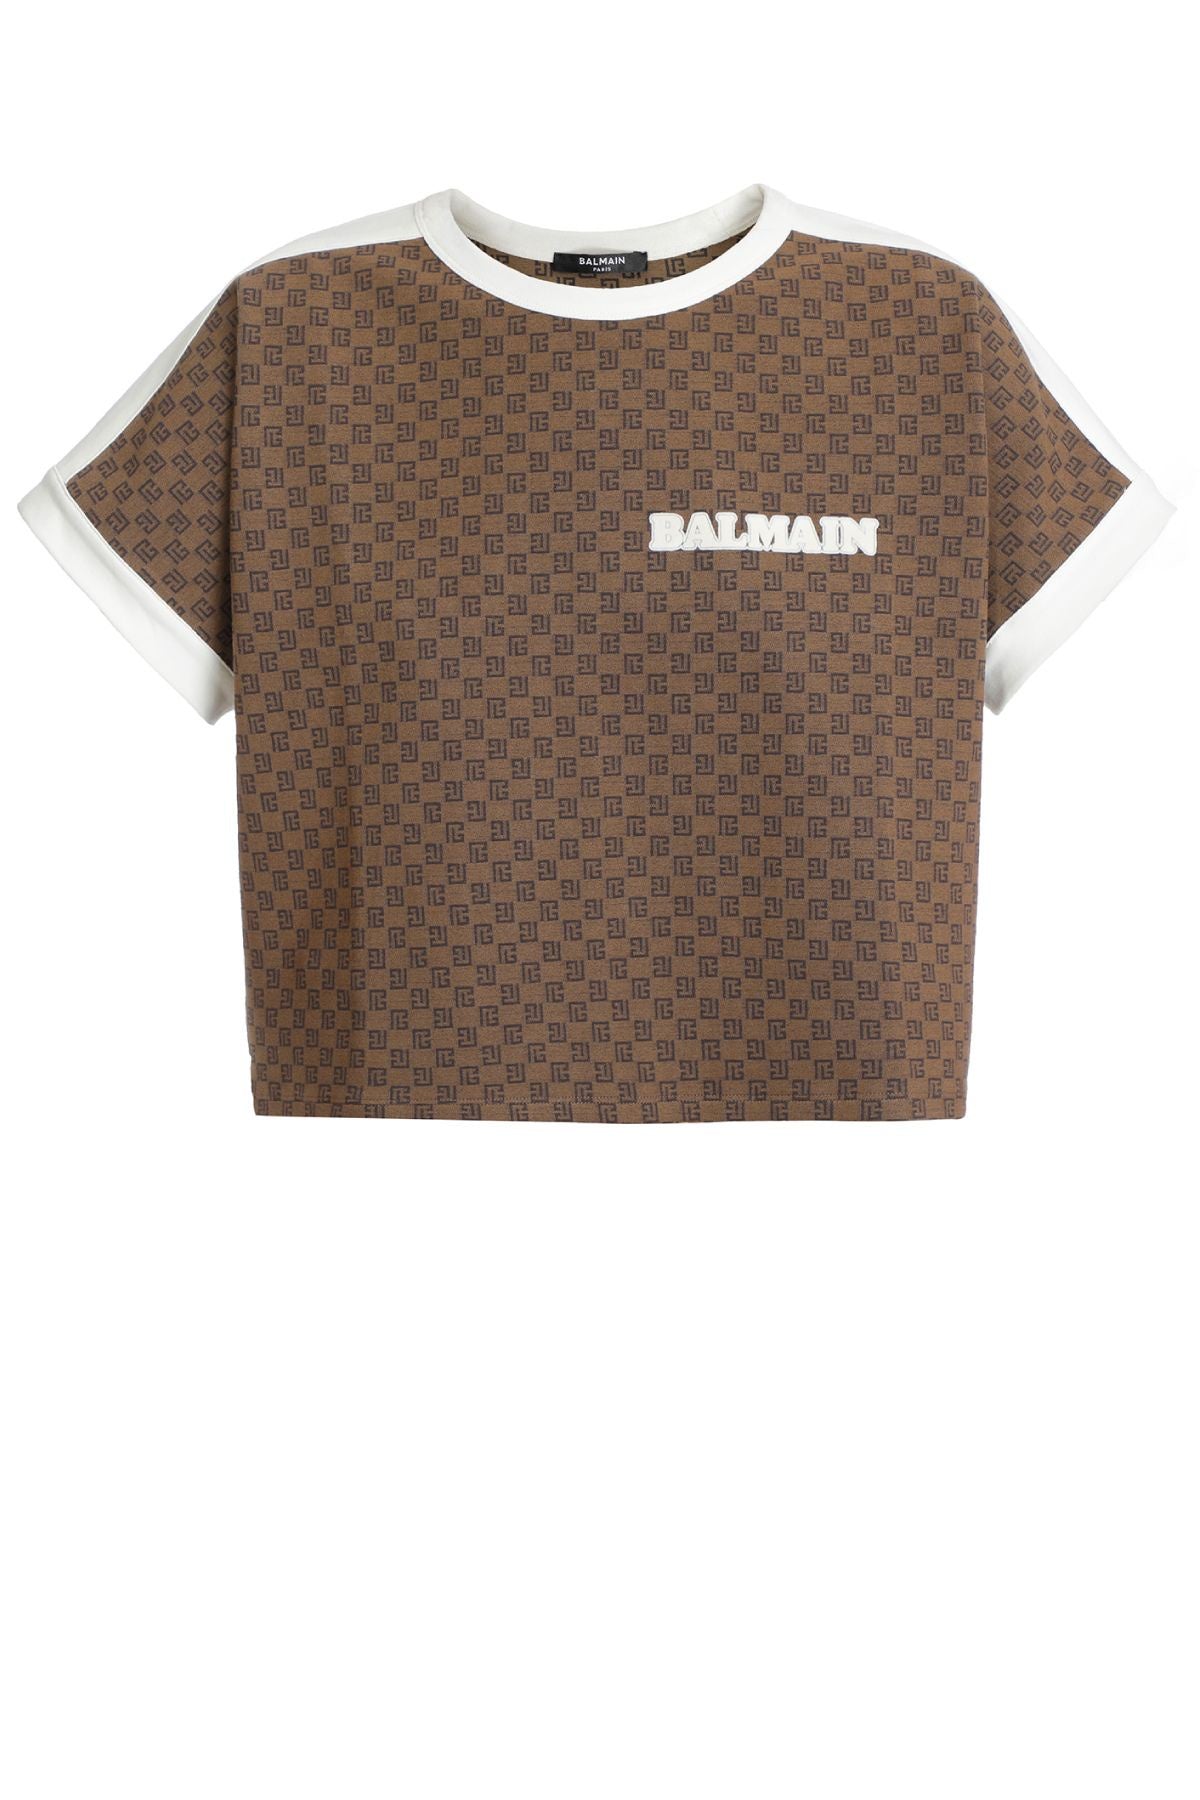 Balmain Monogram Cropped T-Shirt - Brown/ Cream